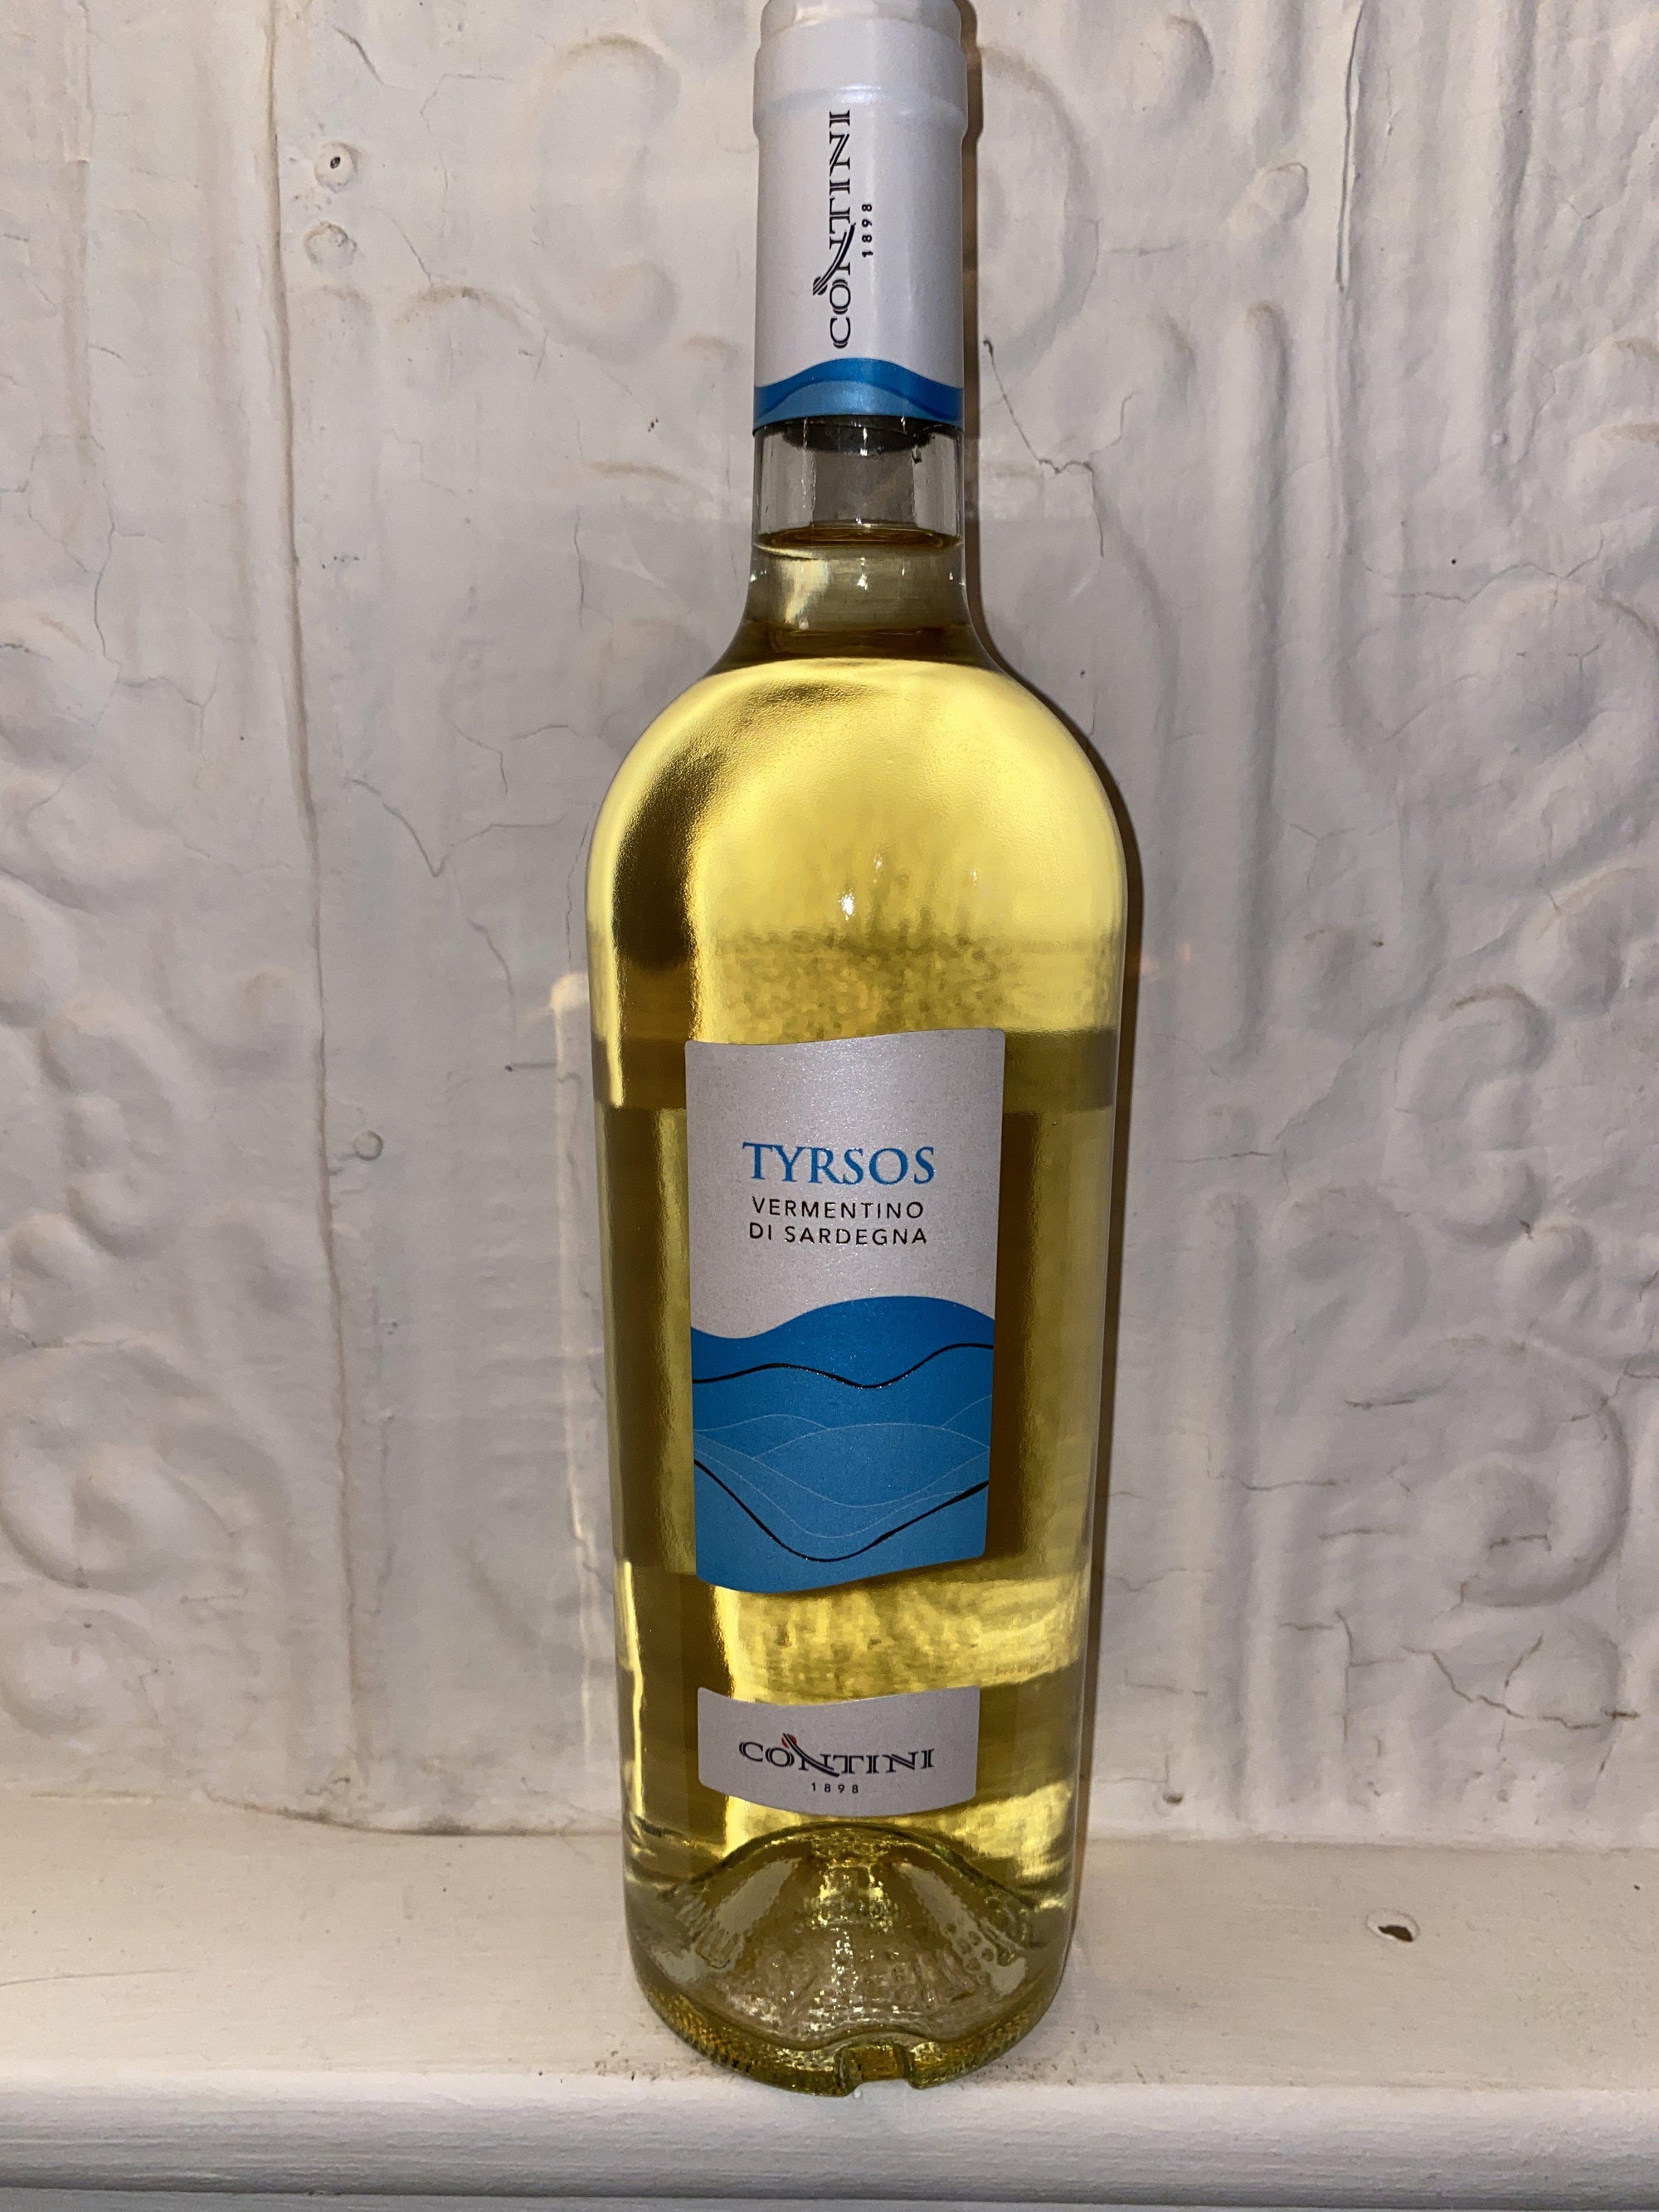 Vermentino Tyrsos, Contini 2019 (Sardegna, Italy)-Wine-Bibber & Bell